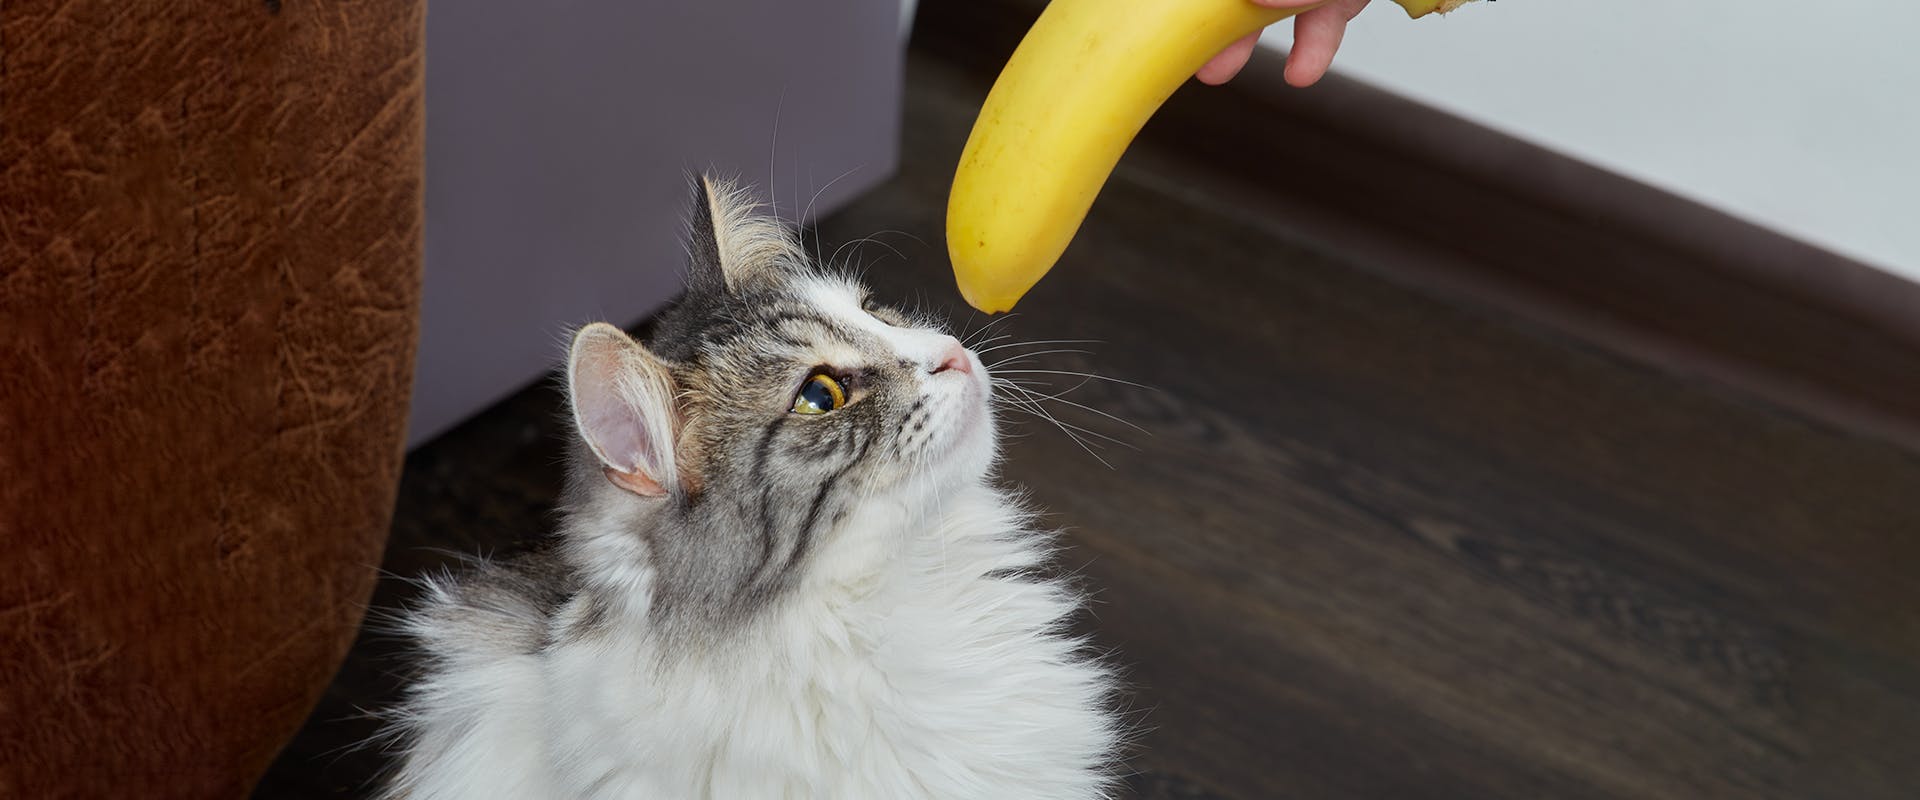 Can cats eat bananas? A cat sniffing at a banana